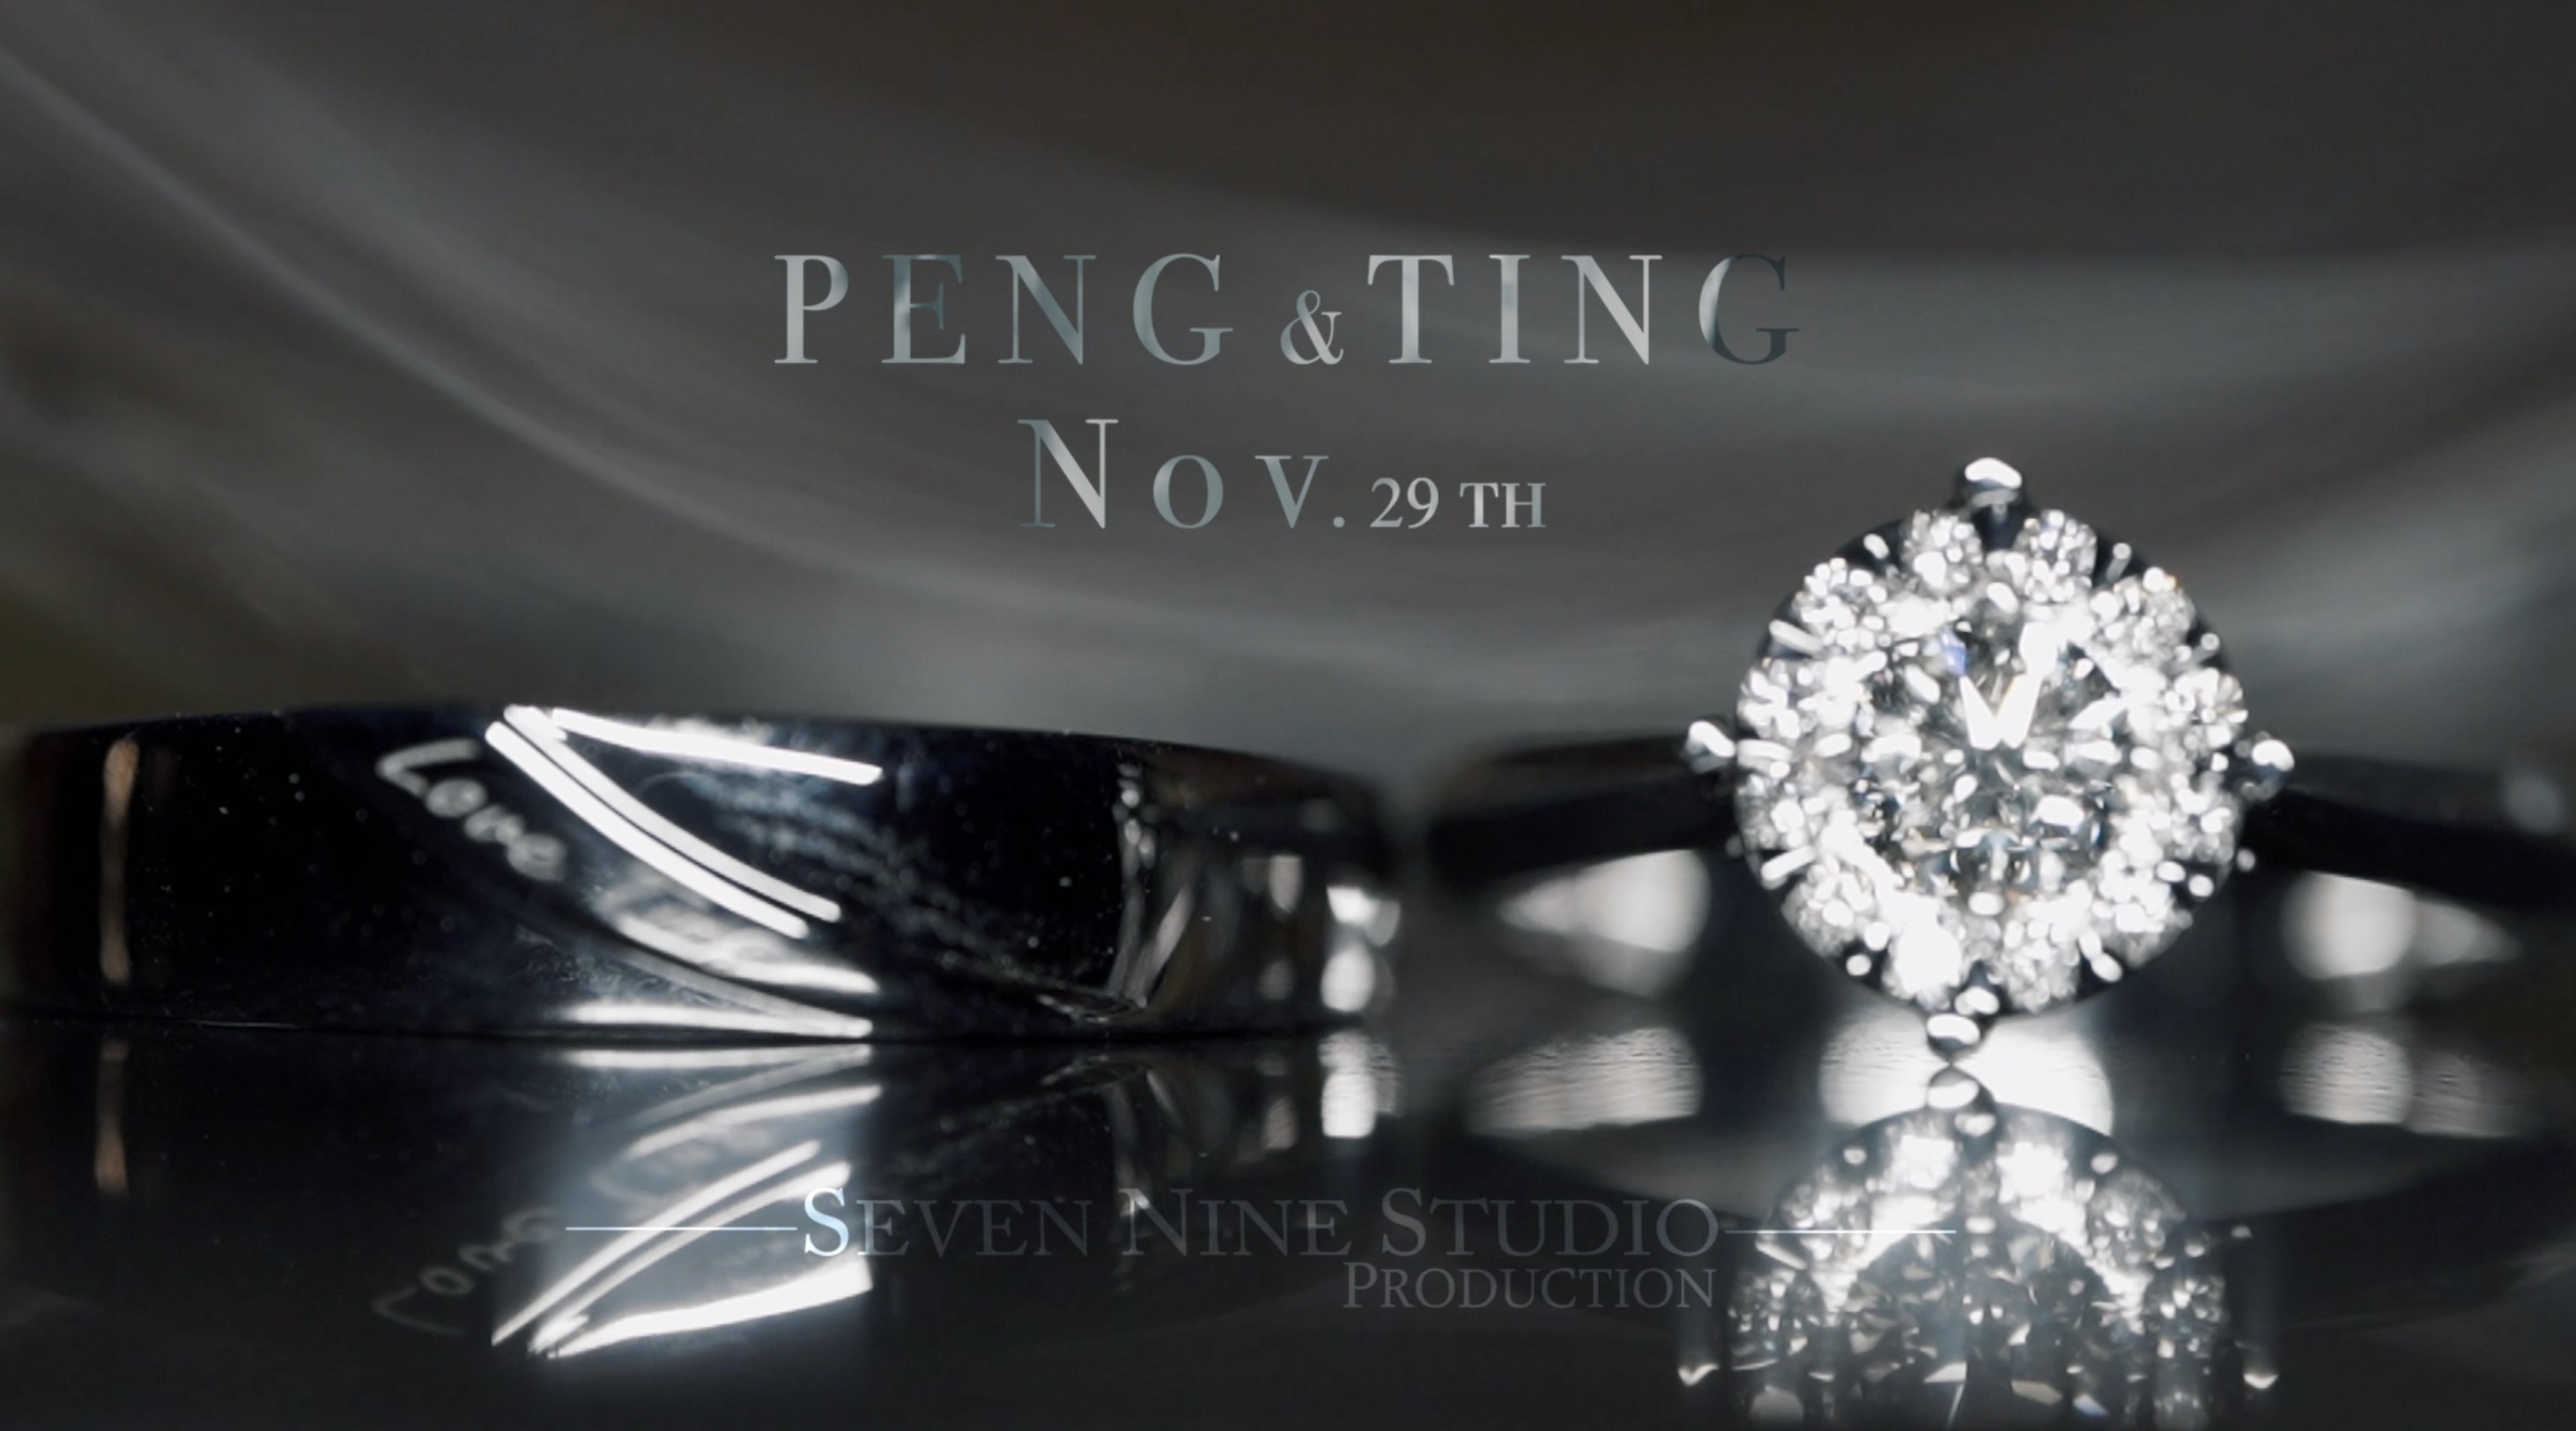 Nov29,2019 婚礼快剪「PENG&TING」· 柒玖影像 